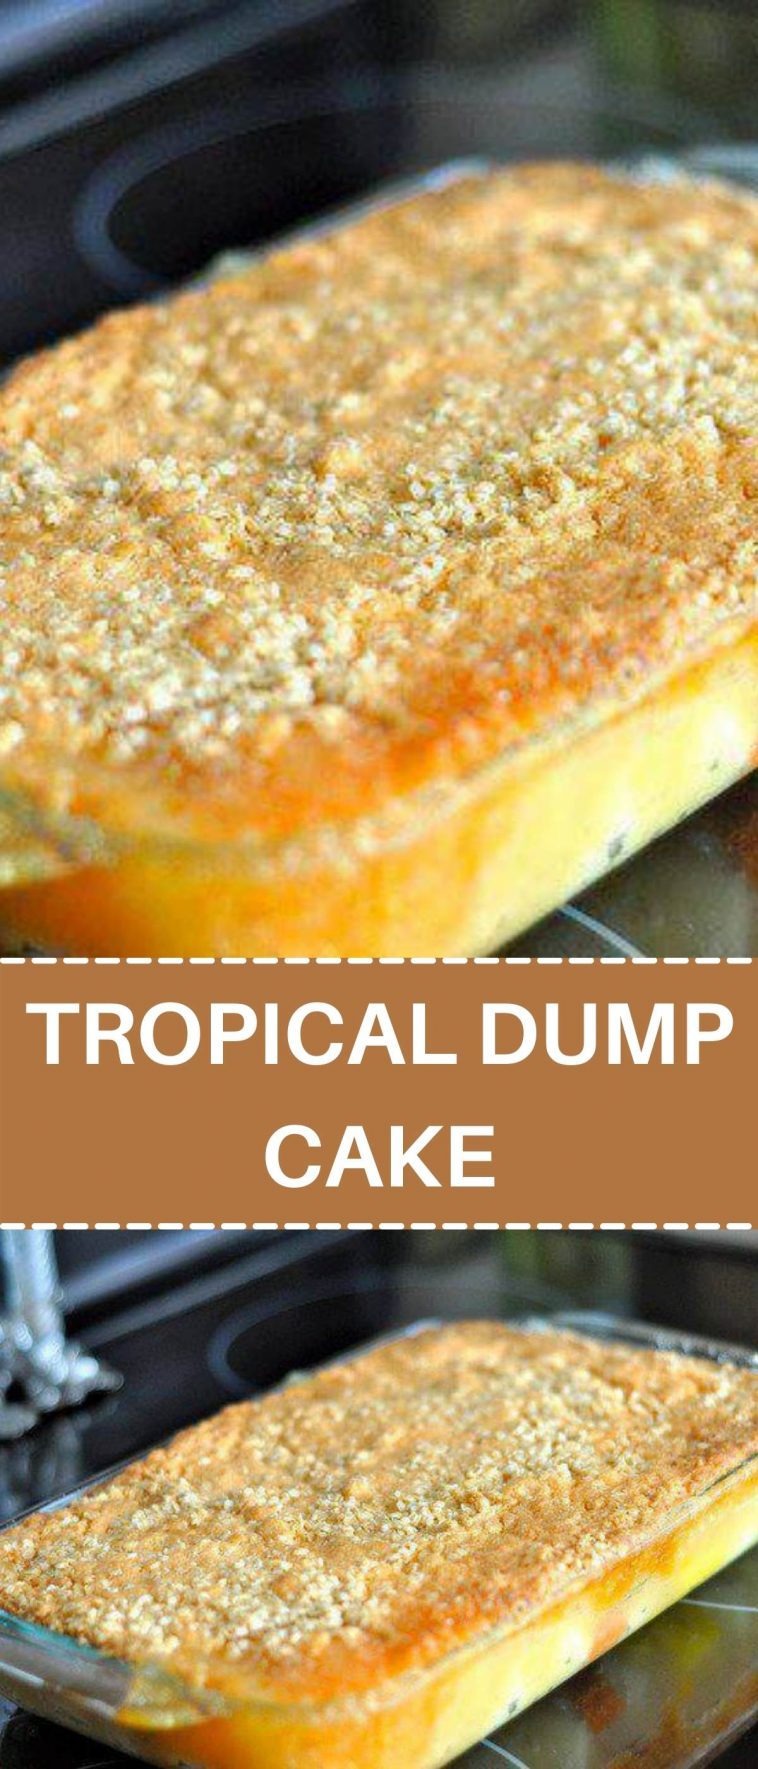 TROPICAL DUMP CAKE